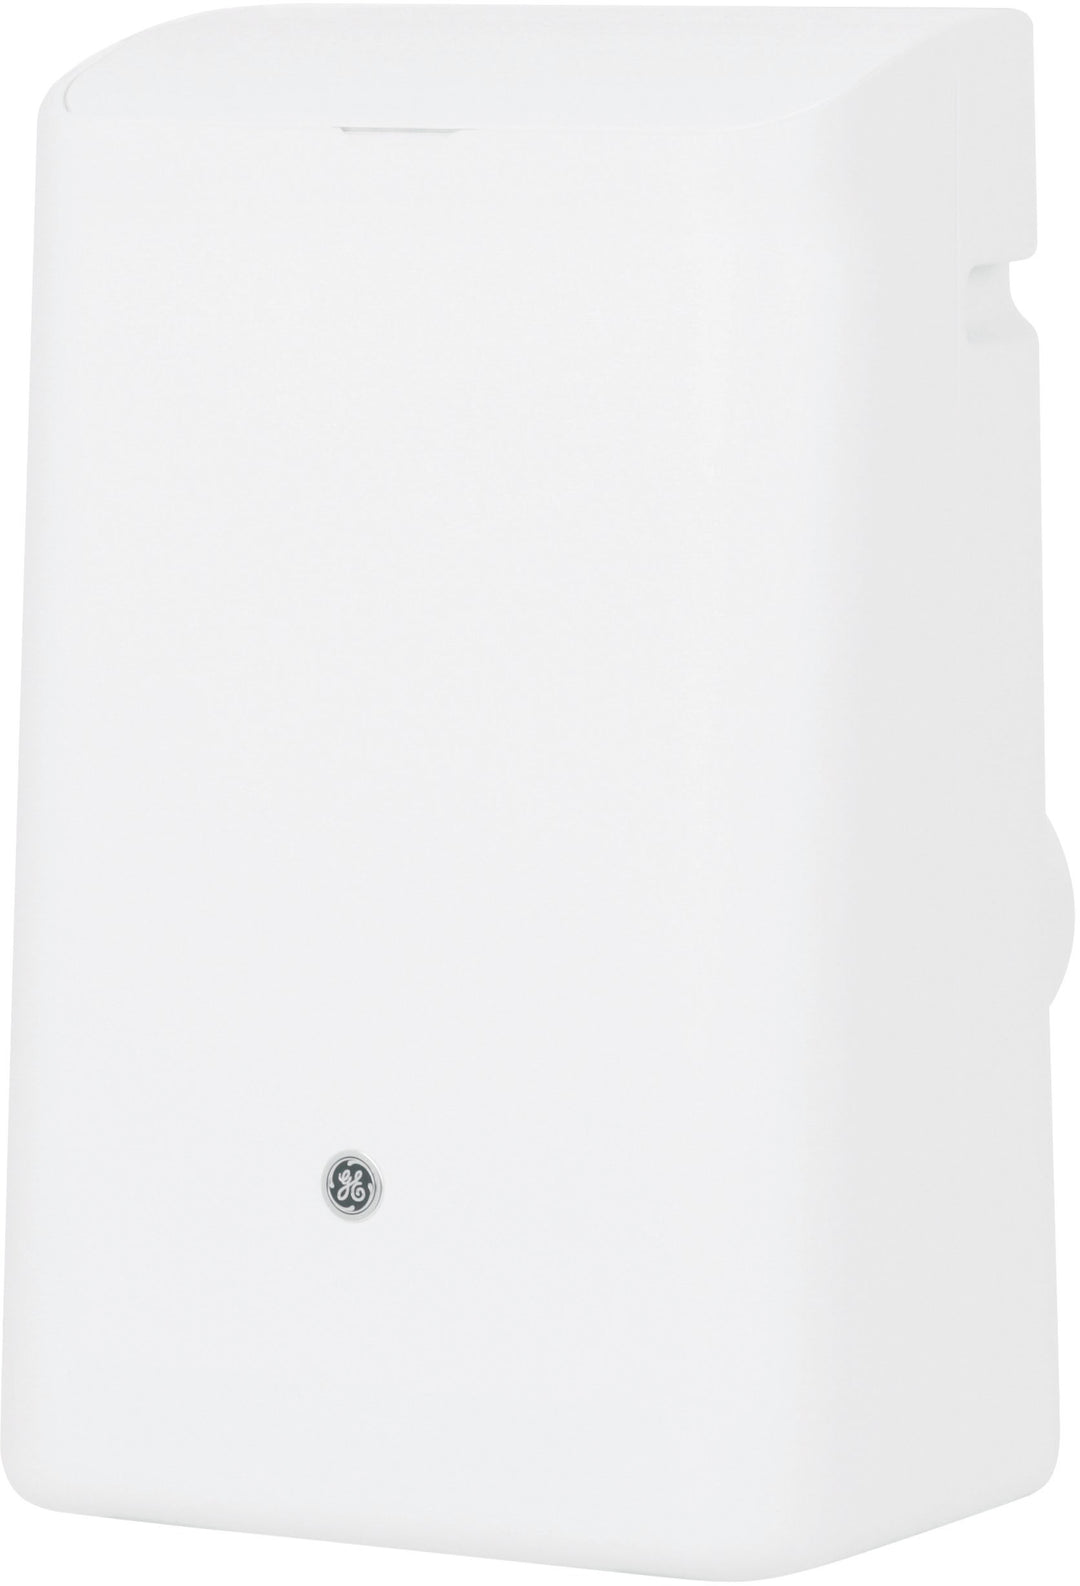 GE - 300 Sq. Ft. 7550 BTU Smart Portable Air Conditioner 10 - White_14